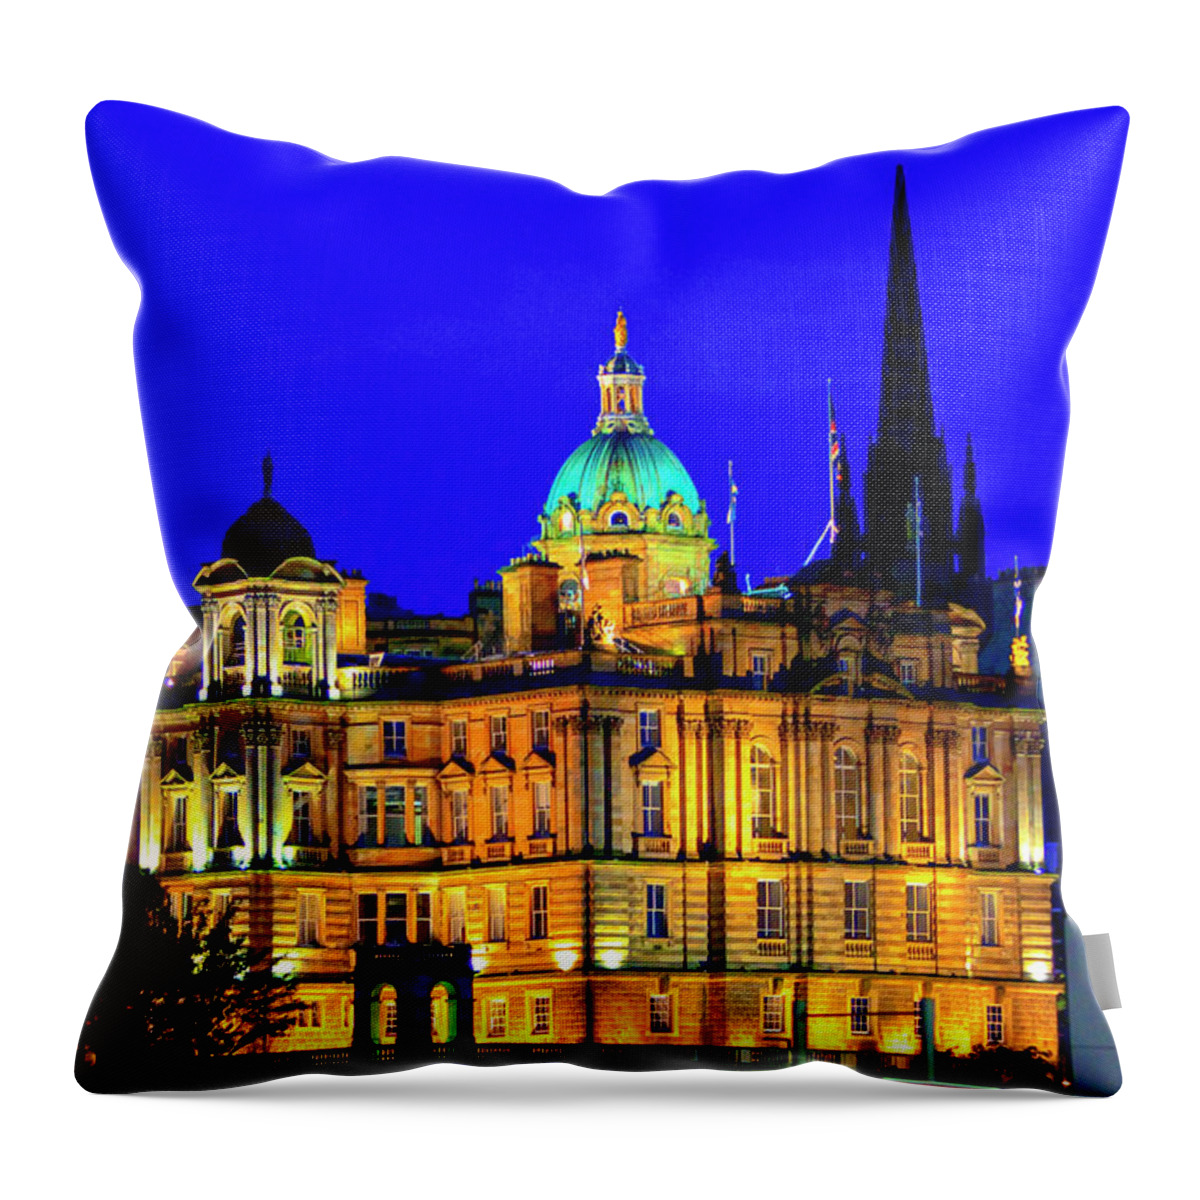 City Of Edinburgh Scotland Throw Pillow featuring the digital art City of Edinburgh Scotland by SnapHappy Photos